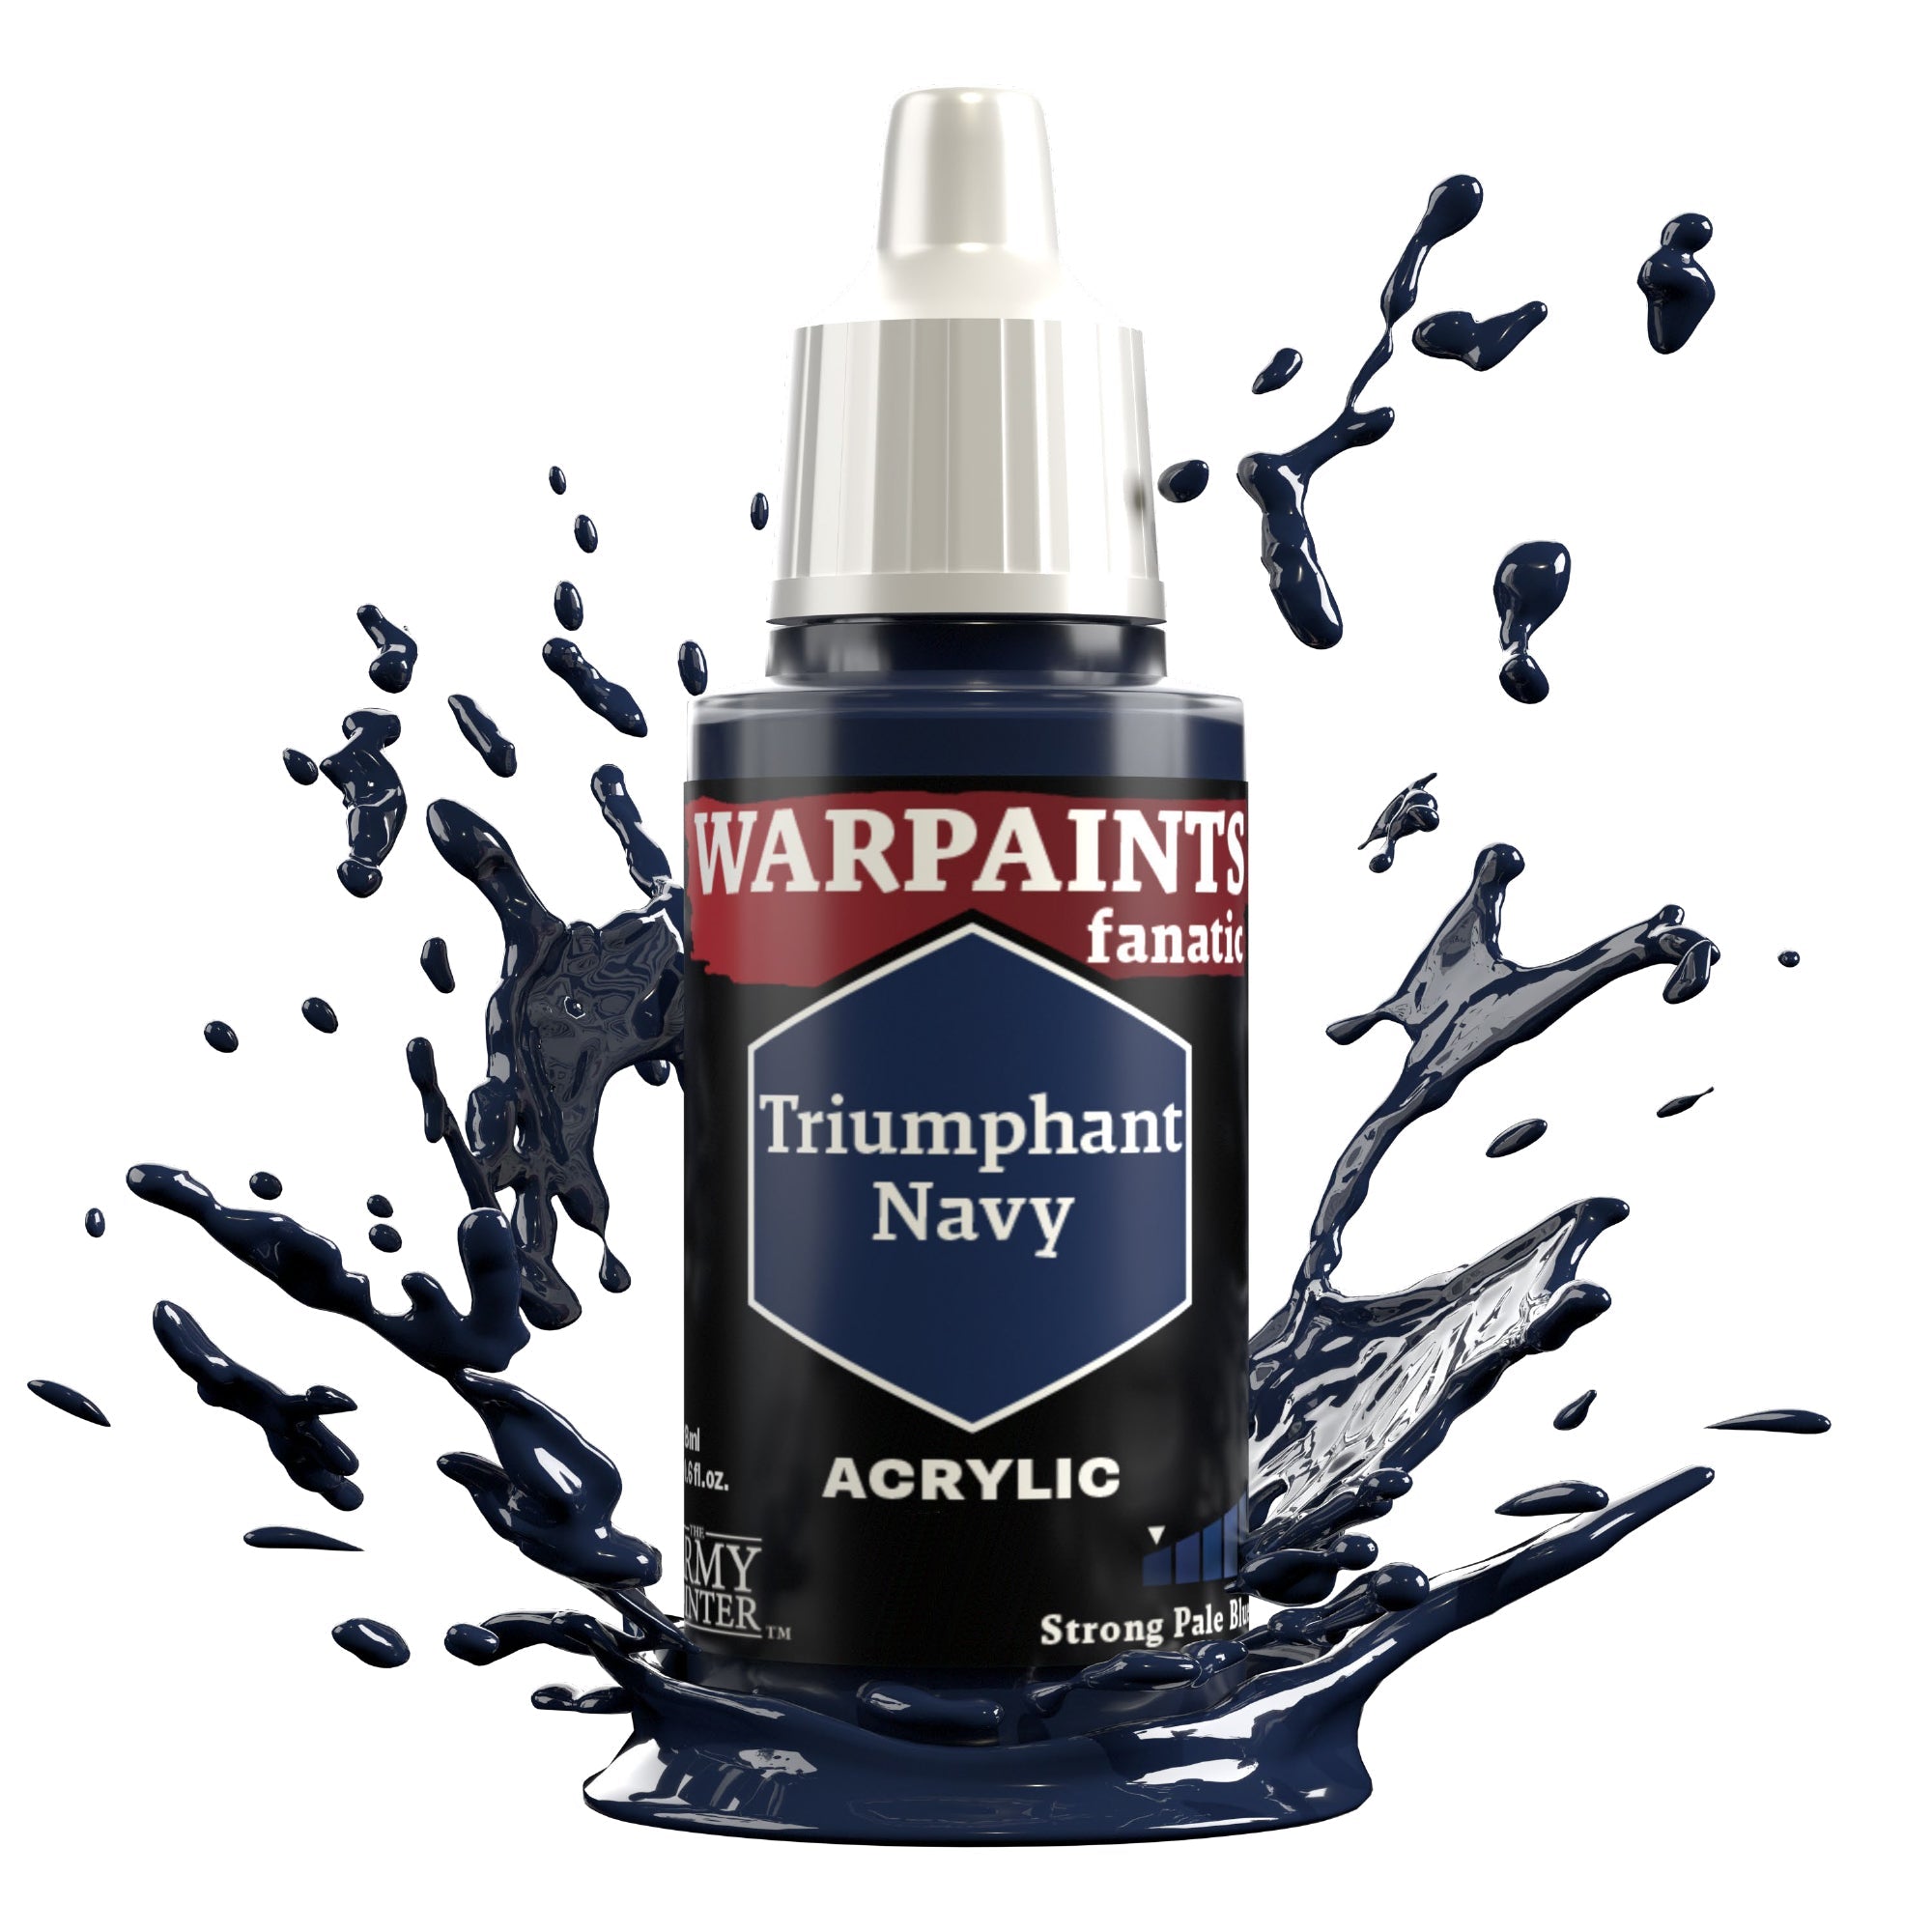 Warpaint Fanatics: Triumphant Navy